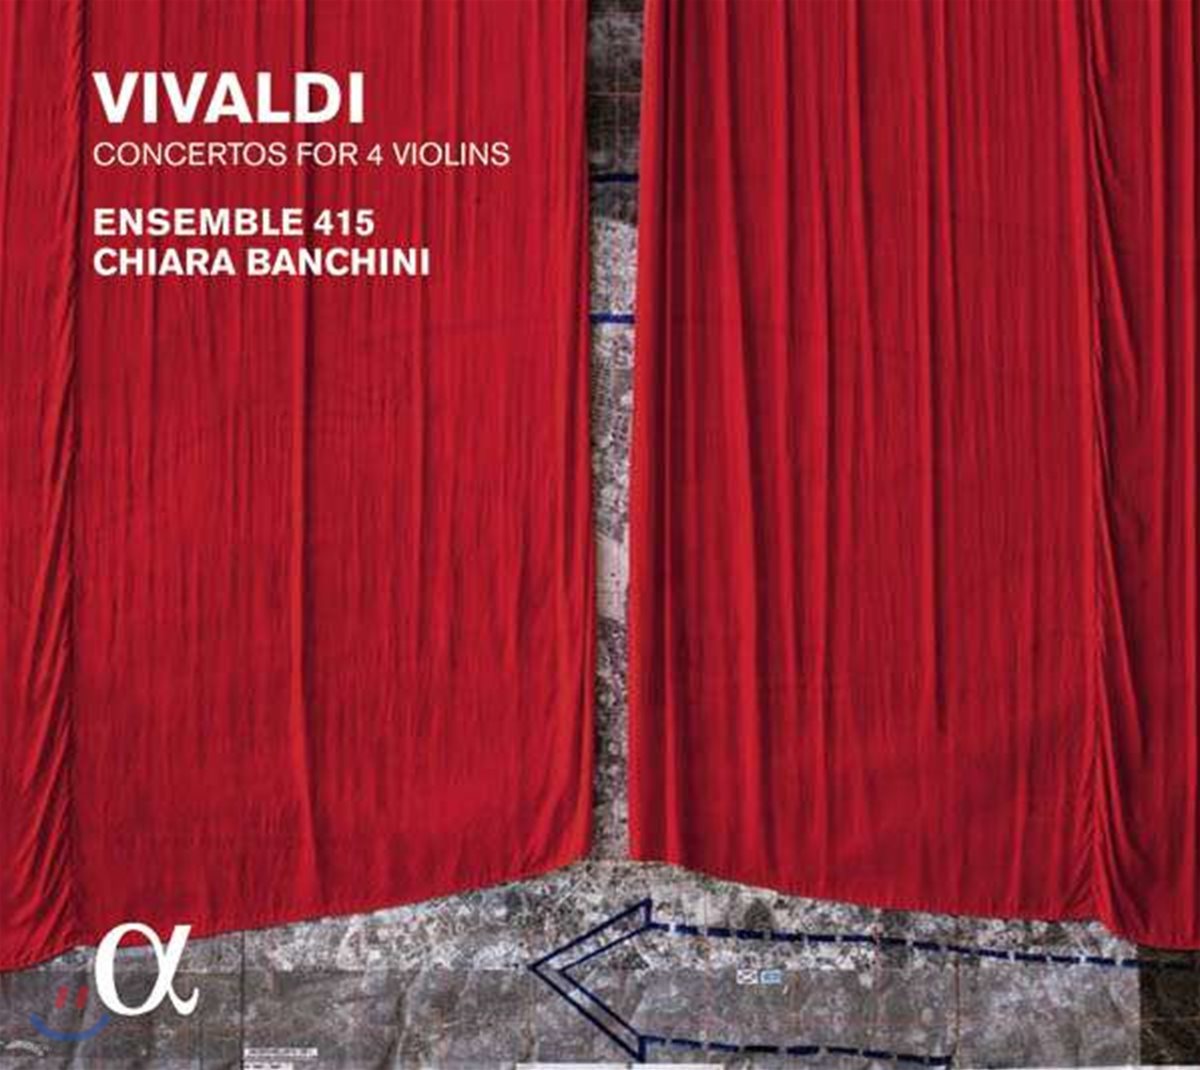 Ensemble 415 비발디: 바이올린 협주곡집 (Vivaldi: Concertos for Four Violins, Op.3)